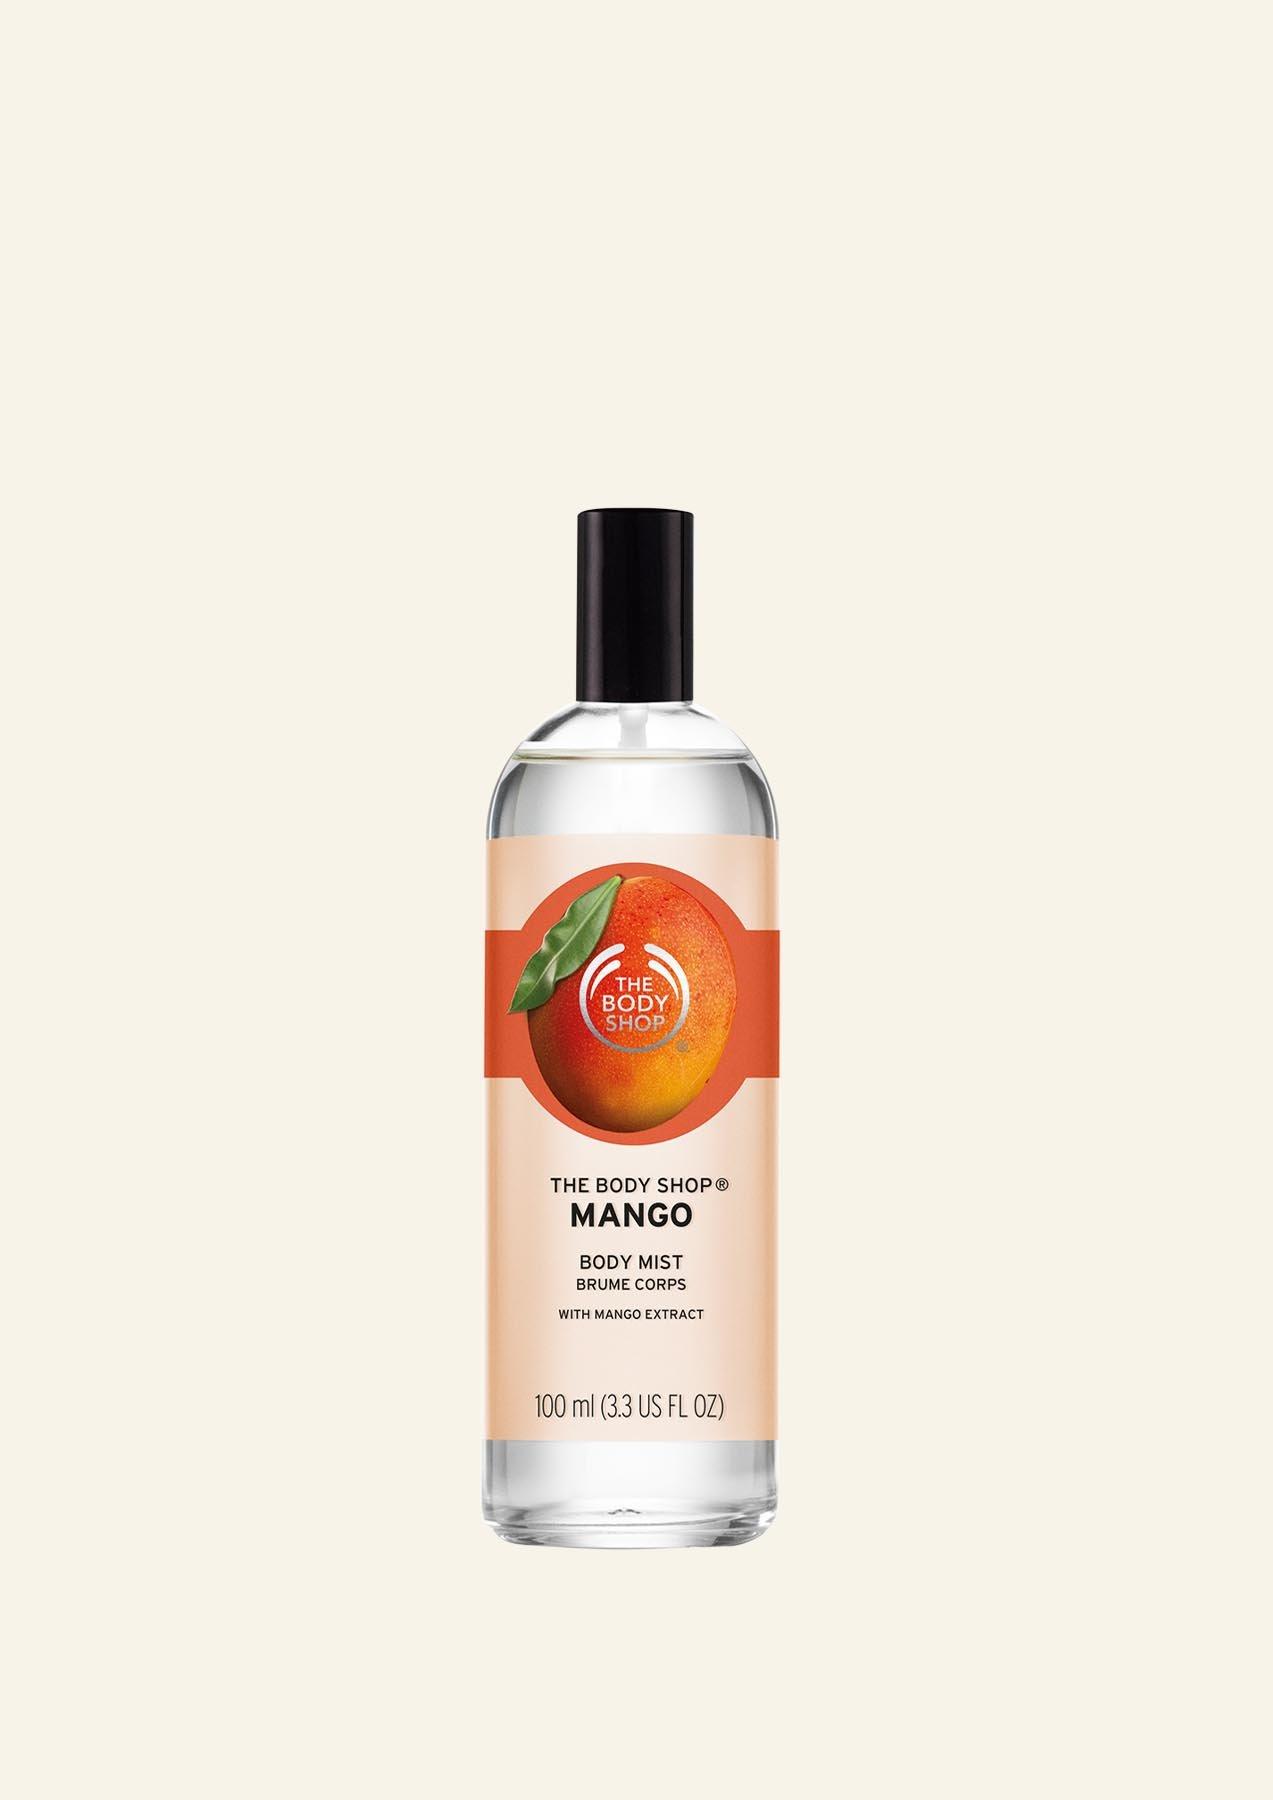 Mango Body Mist Bath And Bodycare The Body Shop